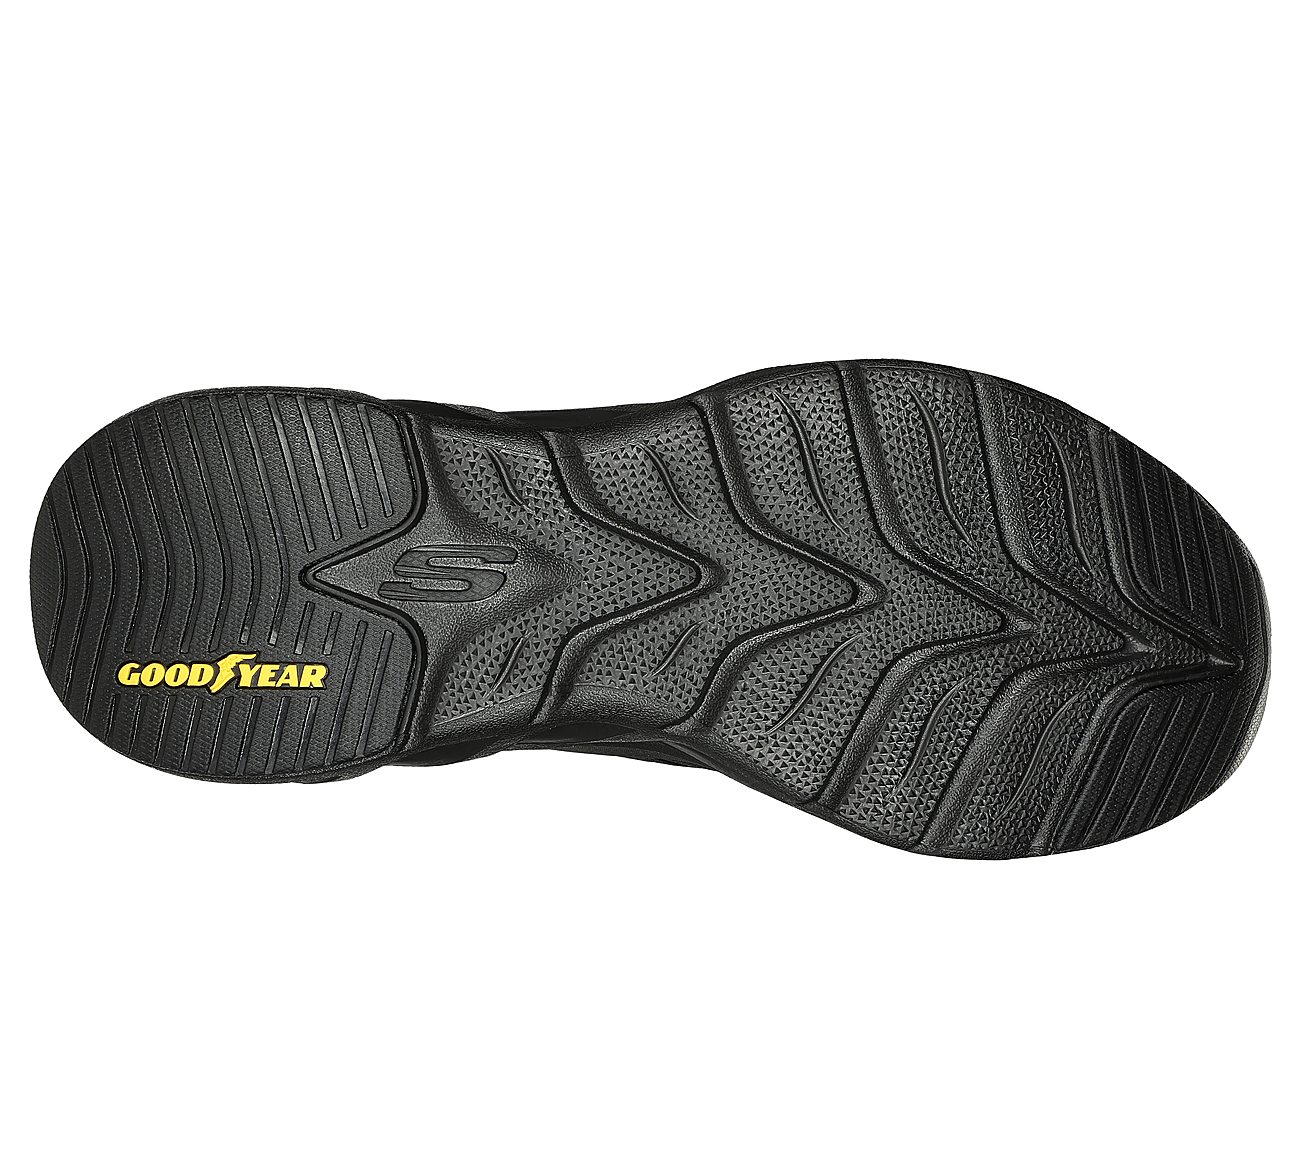 ARCH FIT GLIDE-STEP - KRONOS, BBLACK Footwear Bottom View